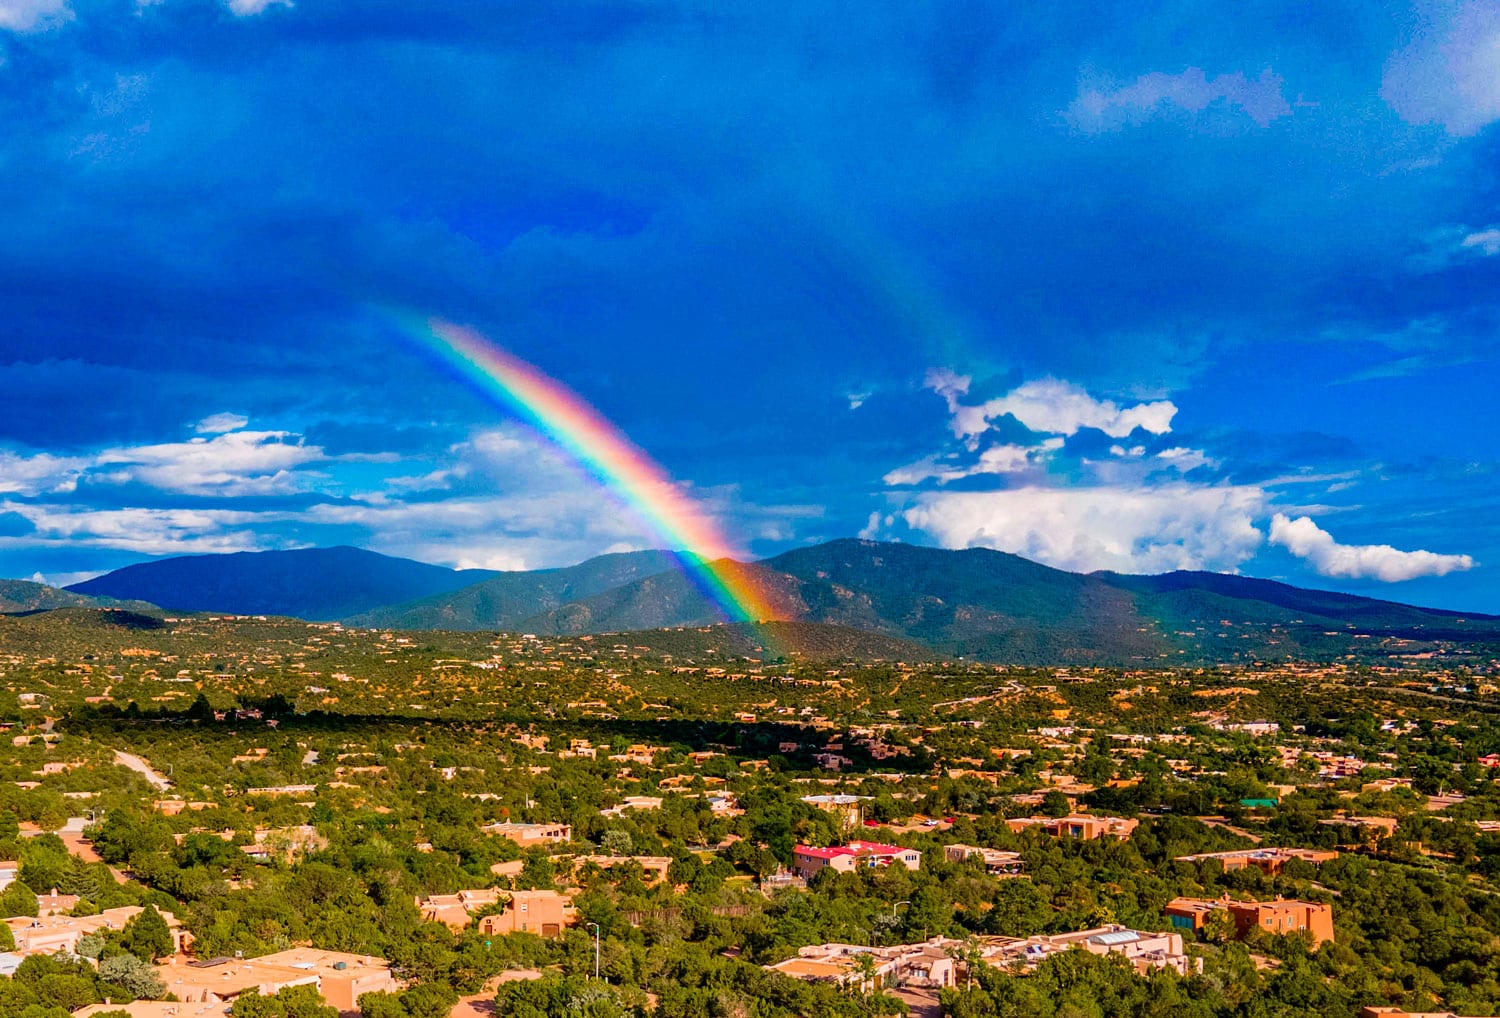 A landscape looking toward the Sangre de Christo Mountains with a bright rainbow over Santa Fe, New Mexico.